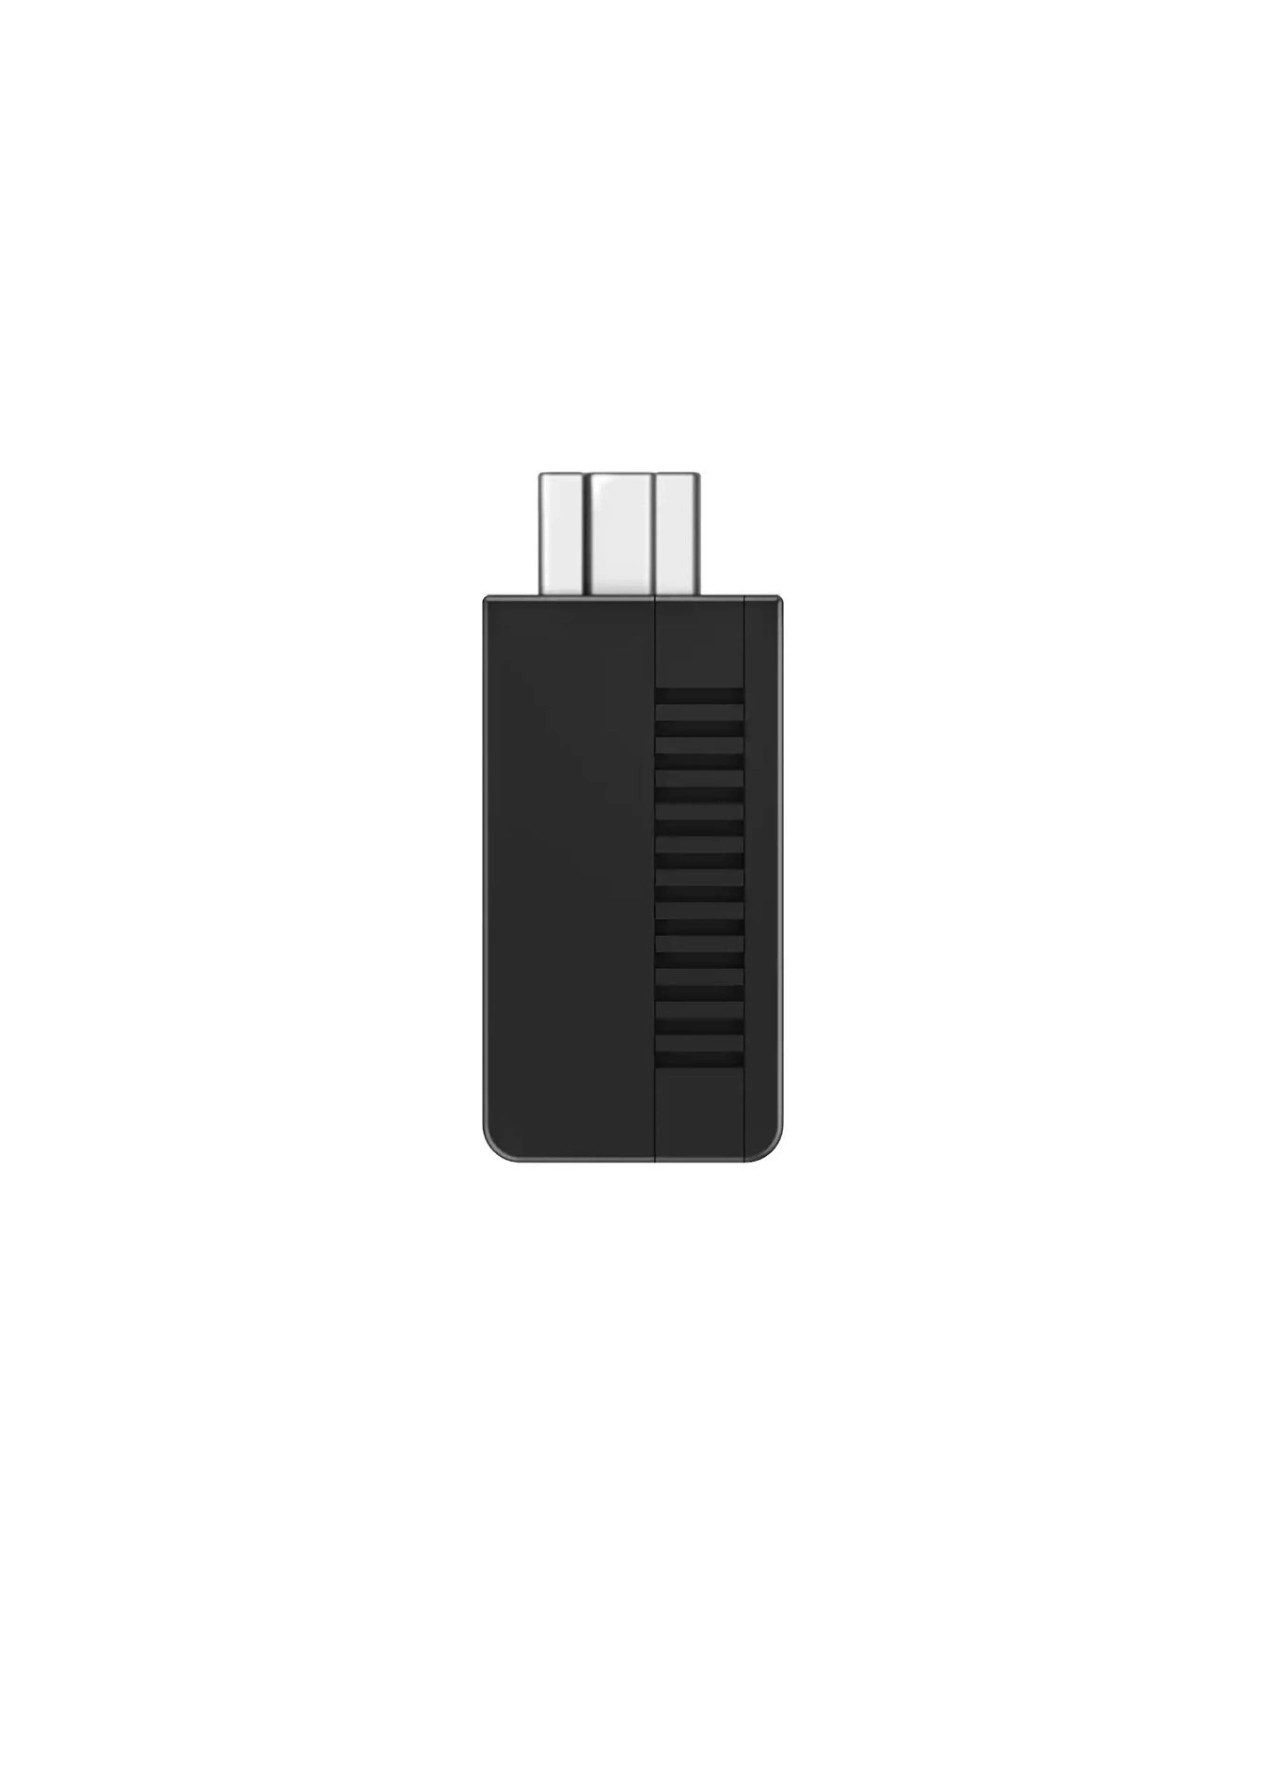 8bitdo Retro Receiver NES/SNES Mini Controller (Kabellos, Kompakt, Design)